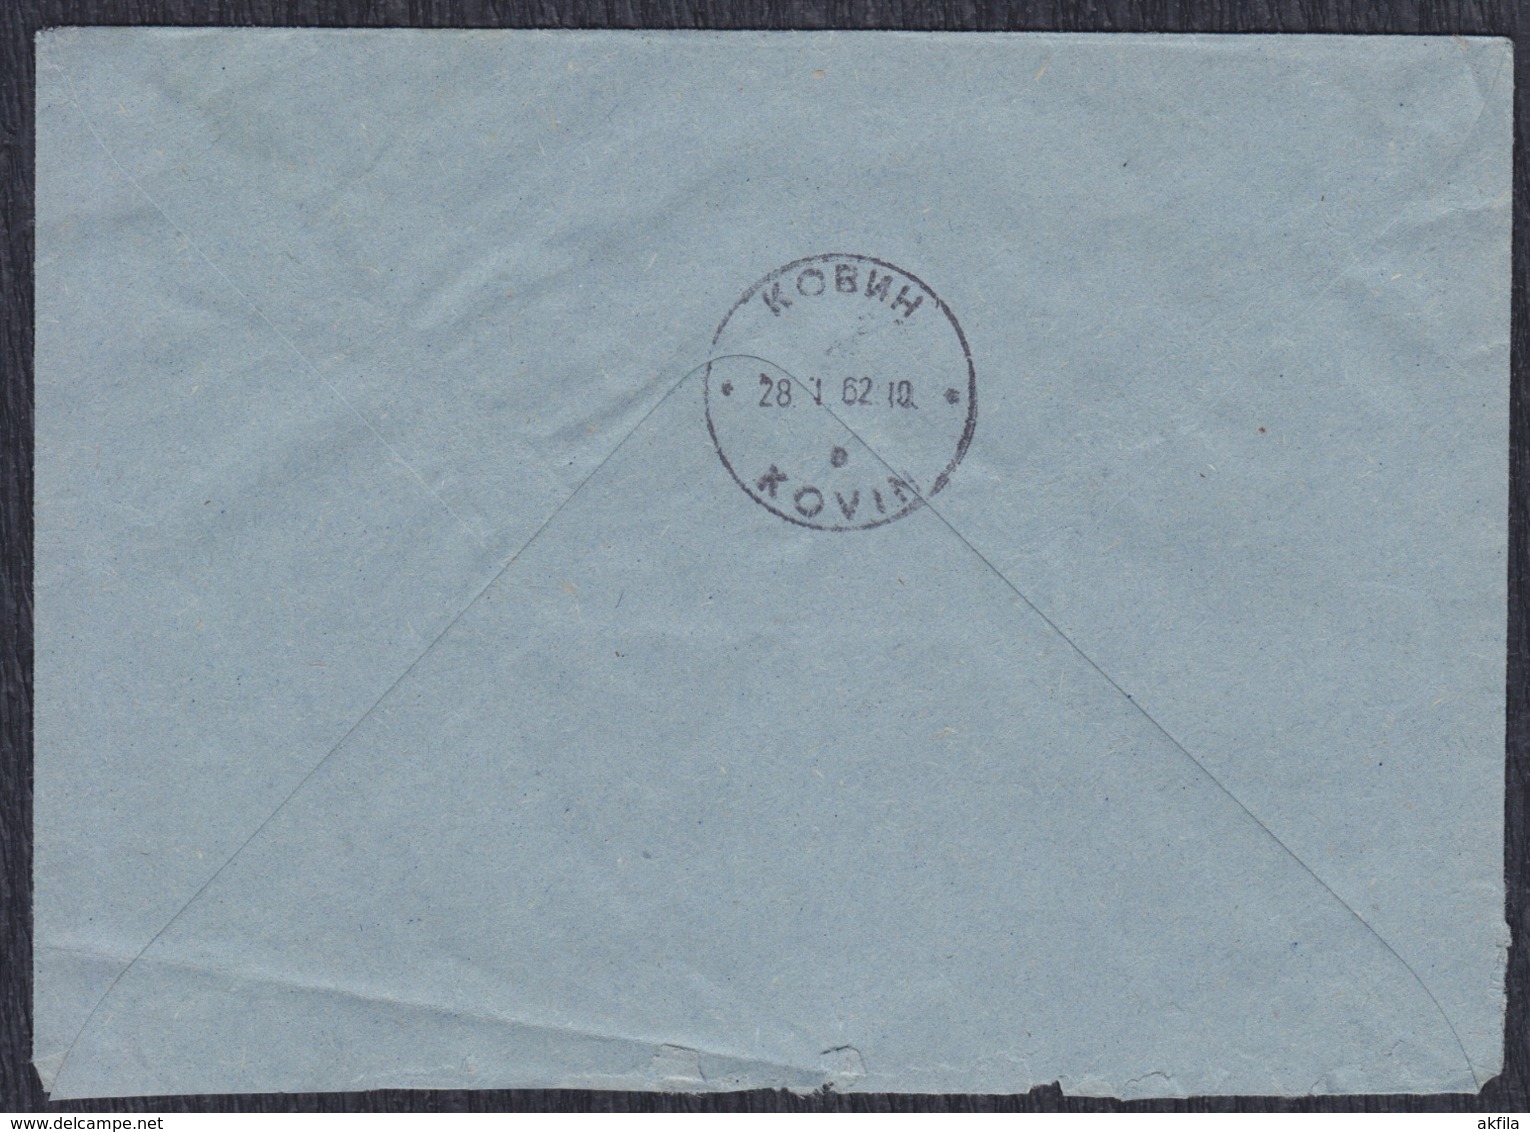 Yugoslavia 1962 Registered Letter Sent From Pancevo To Kovin - Covers & Documents